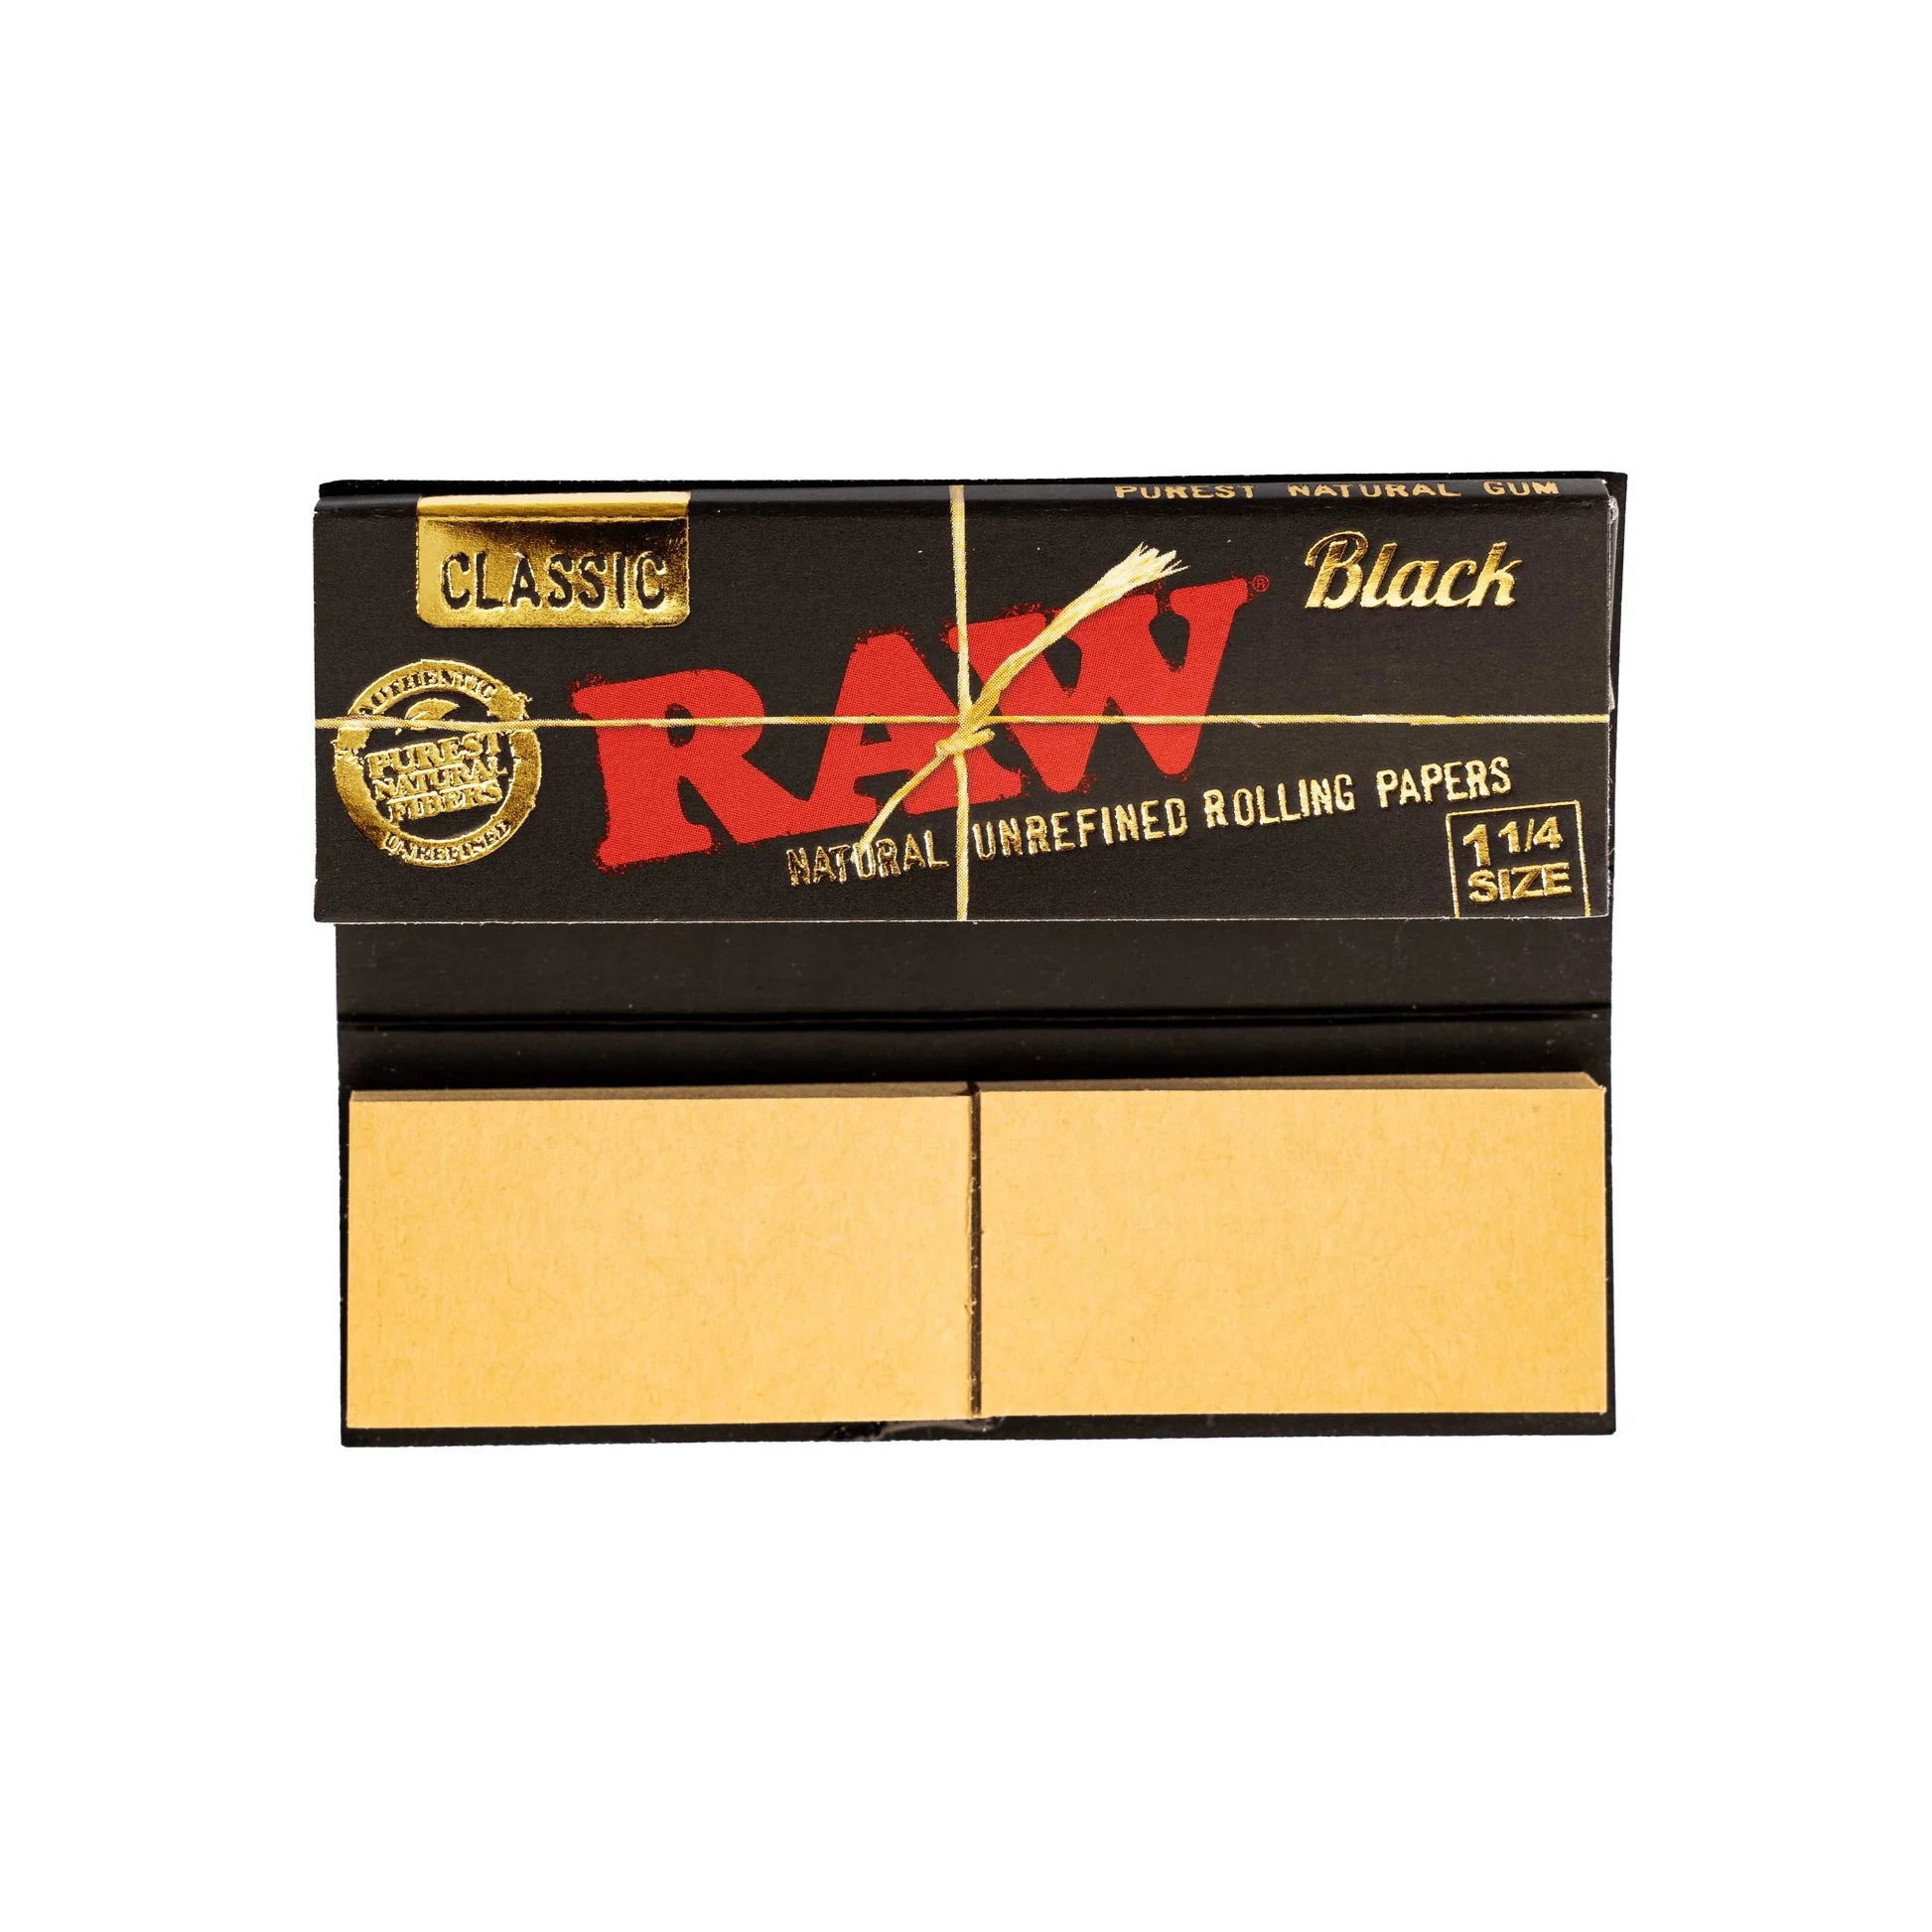 Raw Organic Hemp Connoisseur 1 1/4 Size With Tips - Black